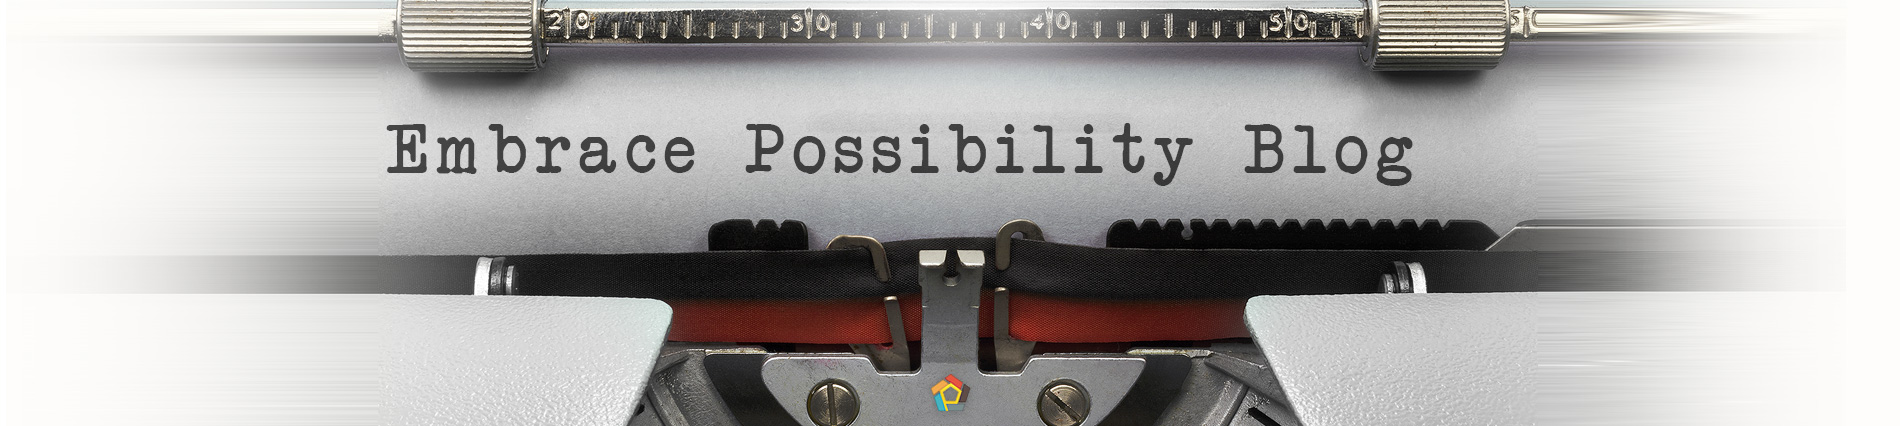 Embrace Possibility Blog